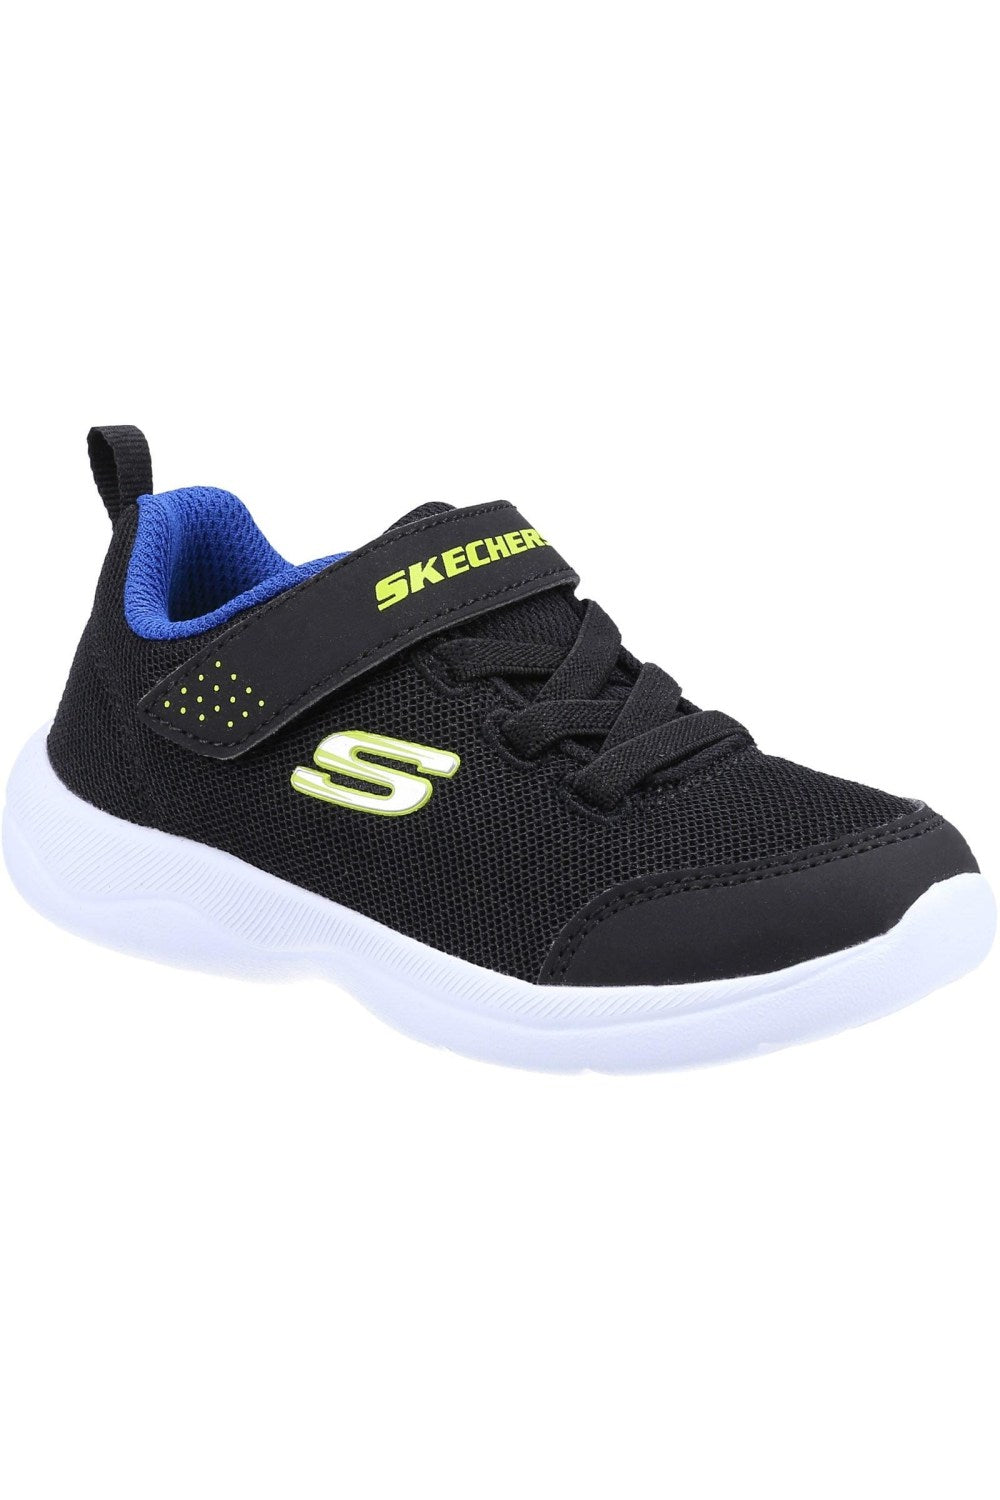 Skechers Childrens/Kids Skech-Stepz 2.0 Mini Wanderer Shoes (Black/Lime)